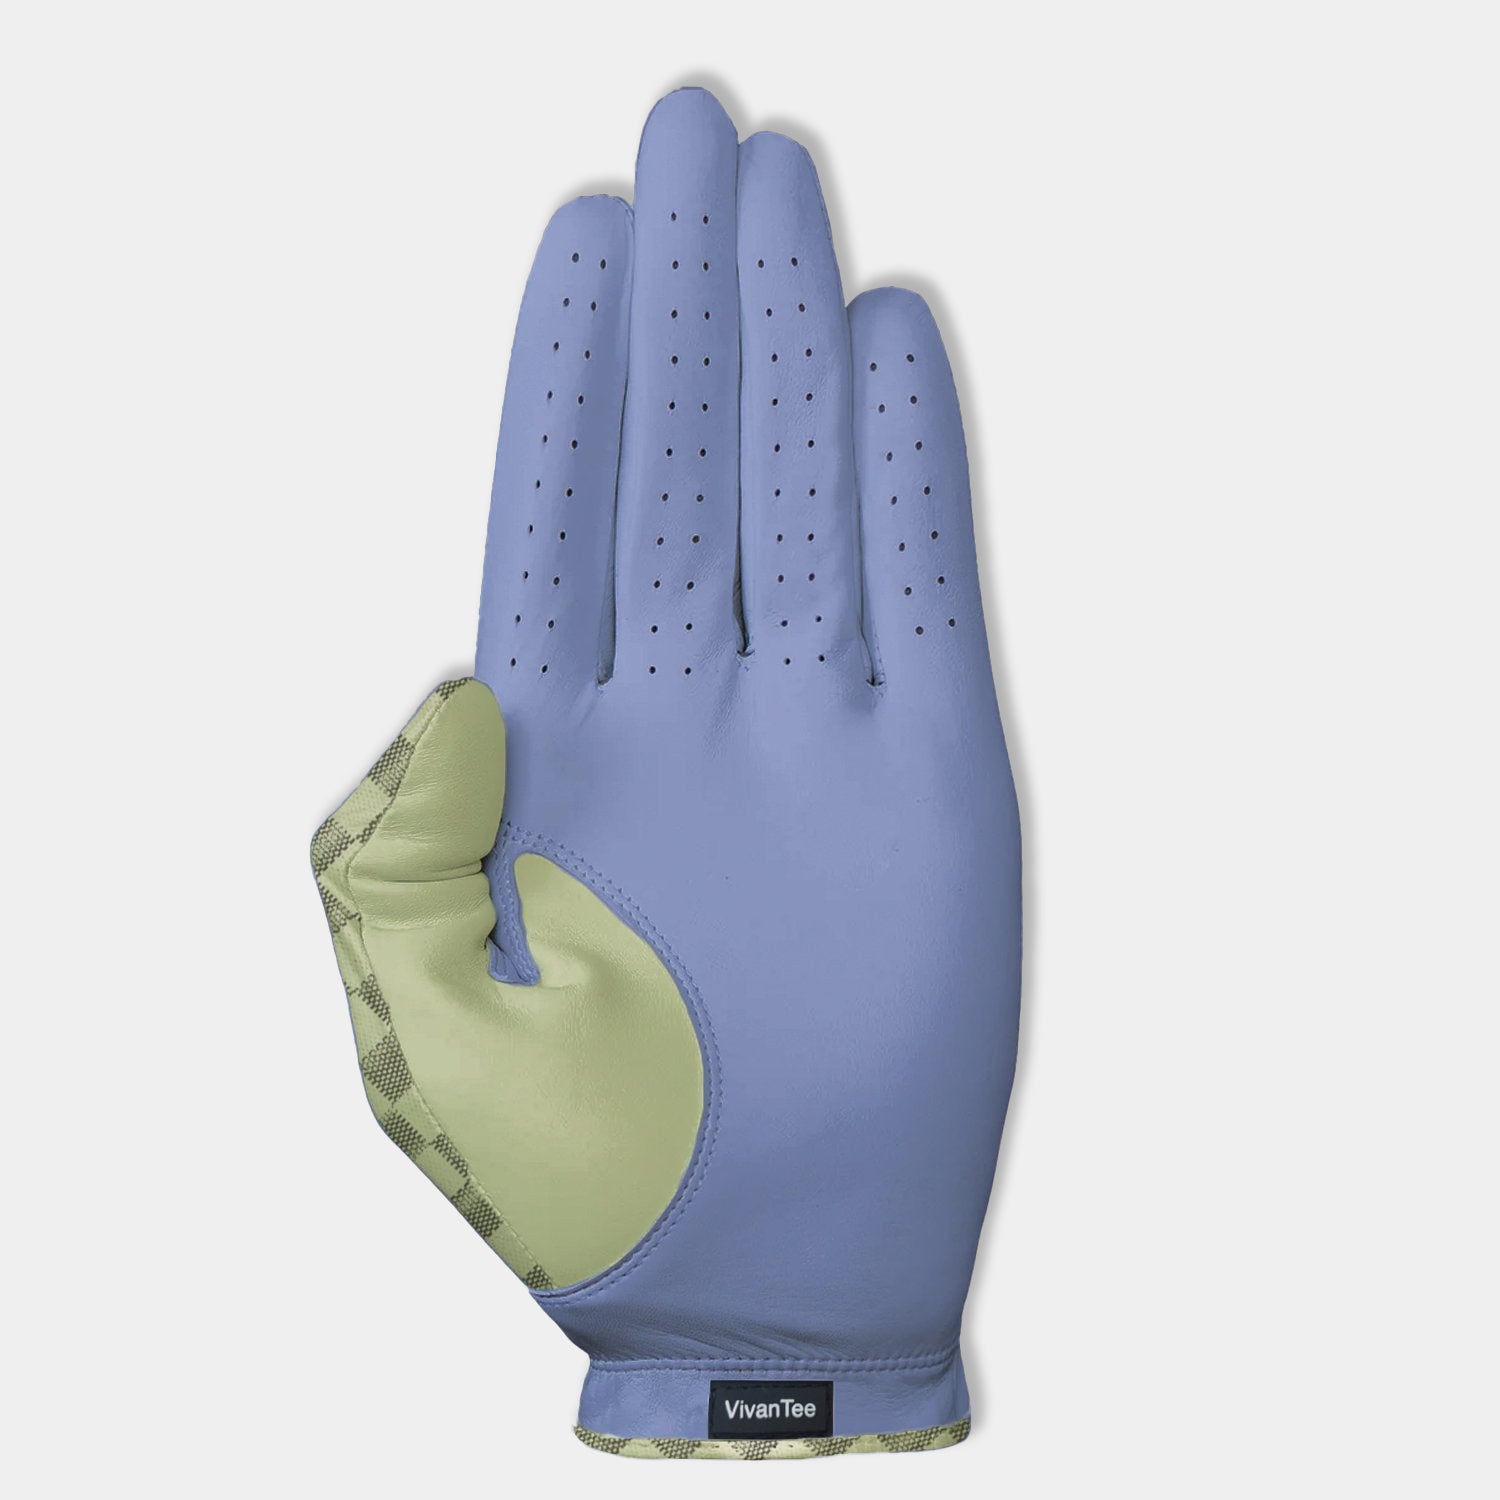 Bottom of lavender golf glove for men showing palm and VivanTee Logo